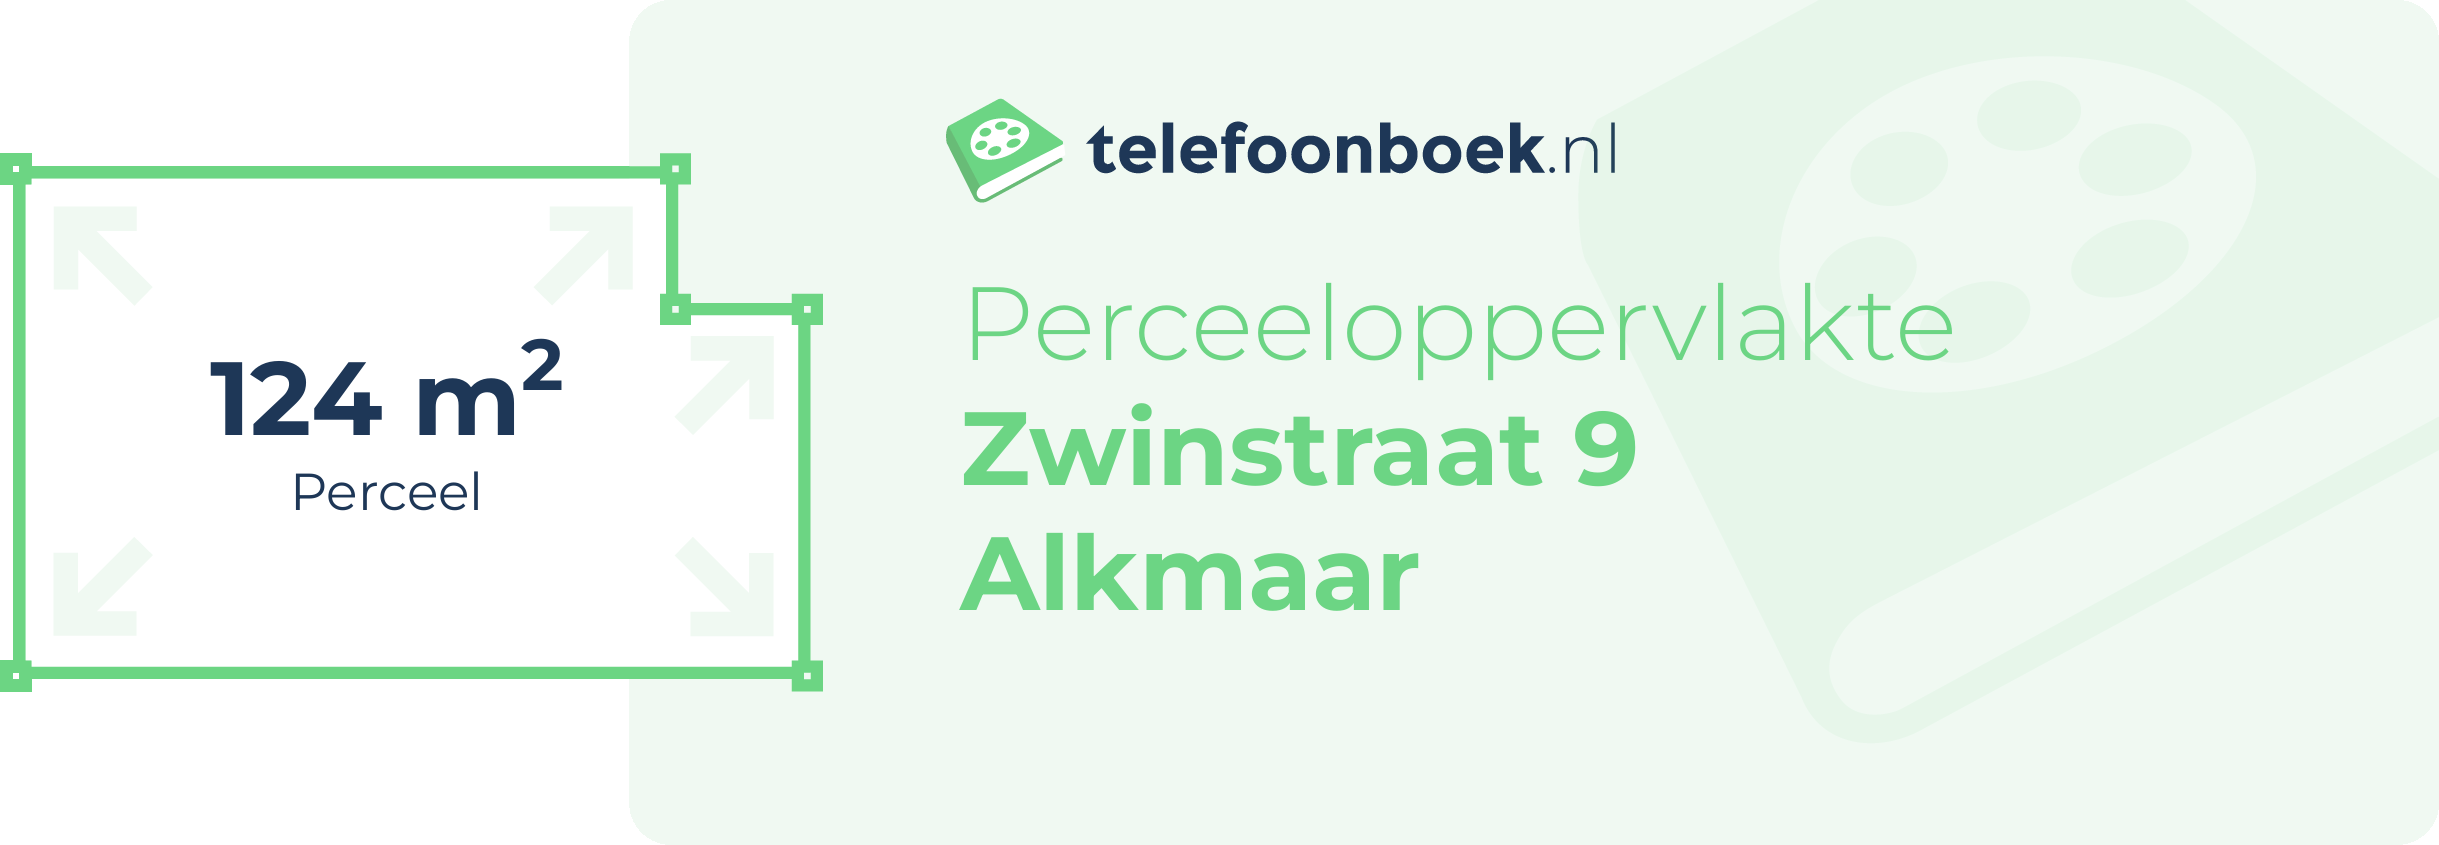 Perceeloppervlakte Zwinstraat 9 Alkmaar